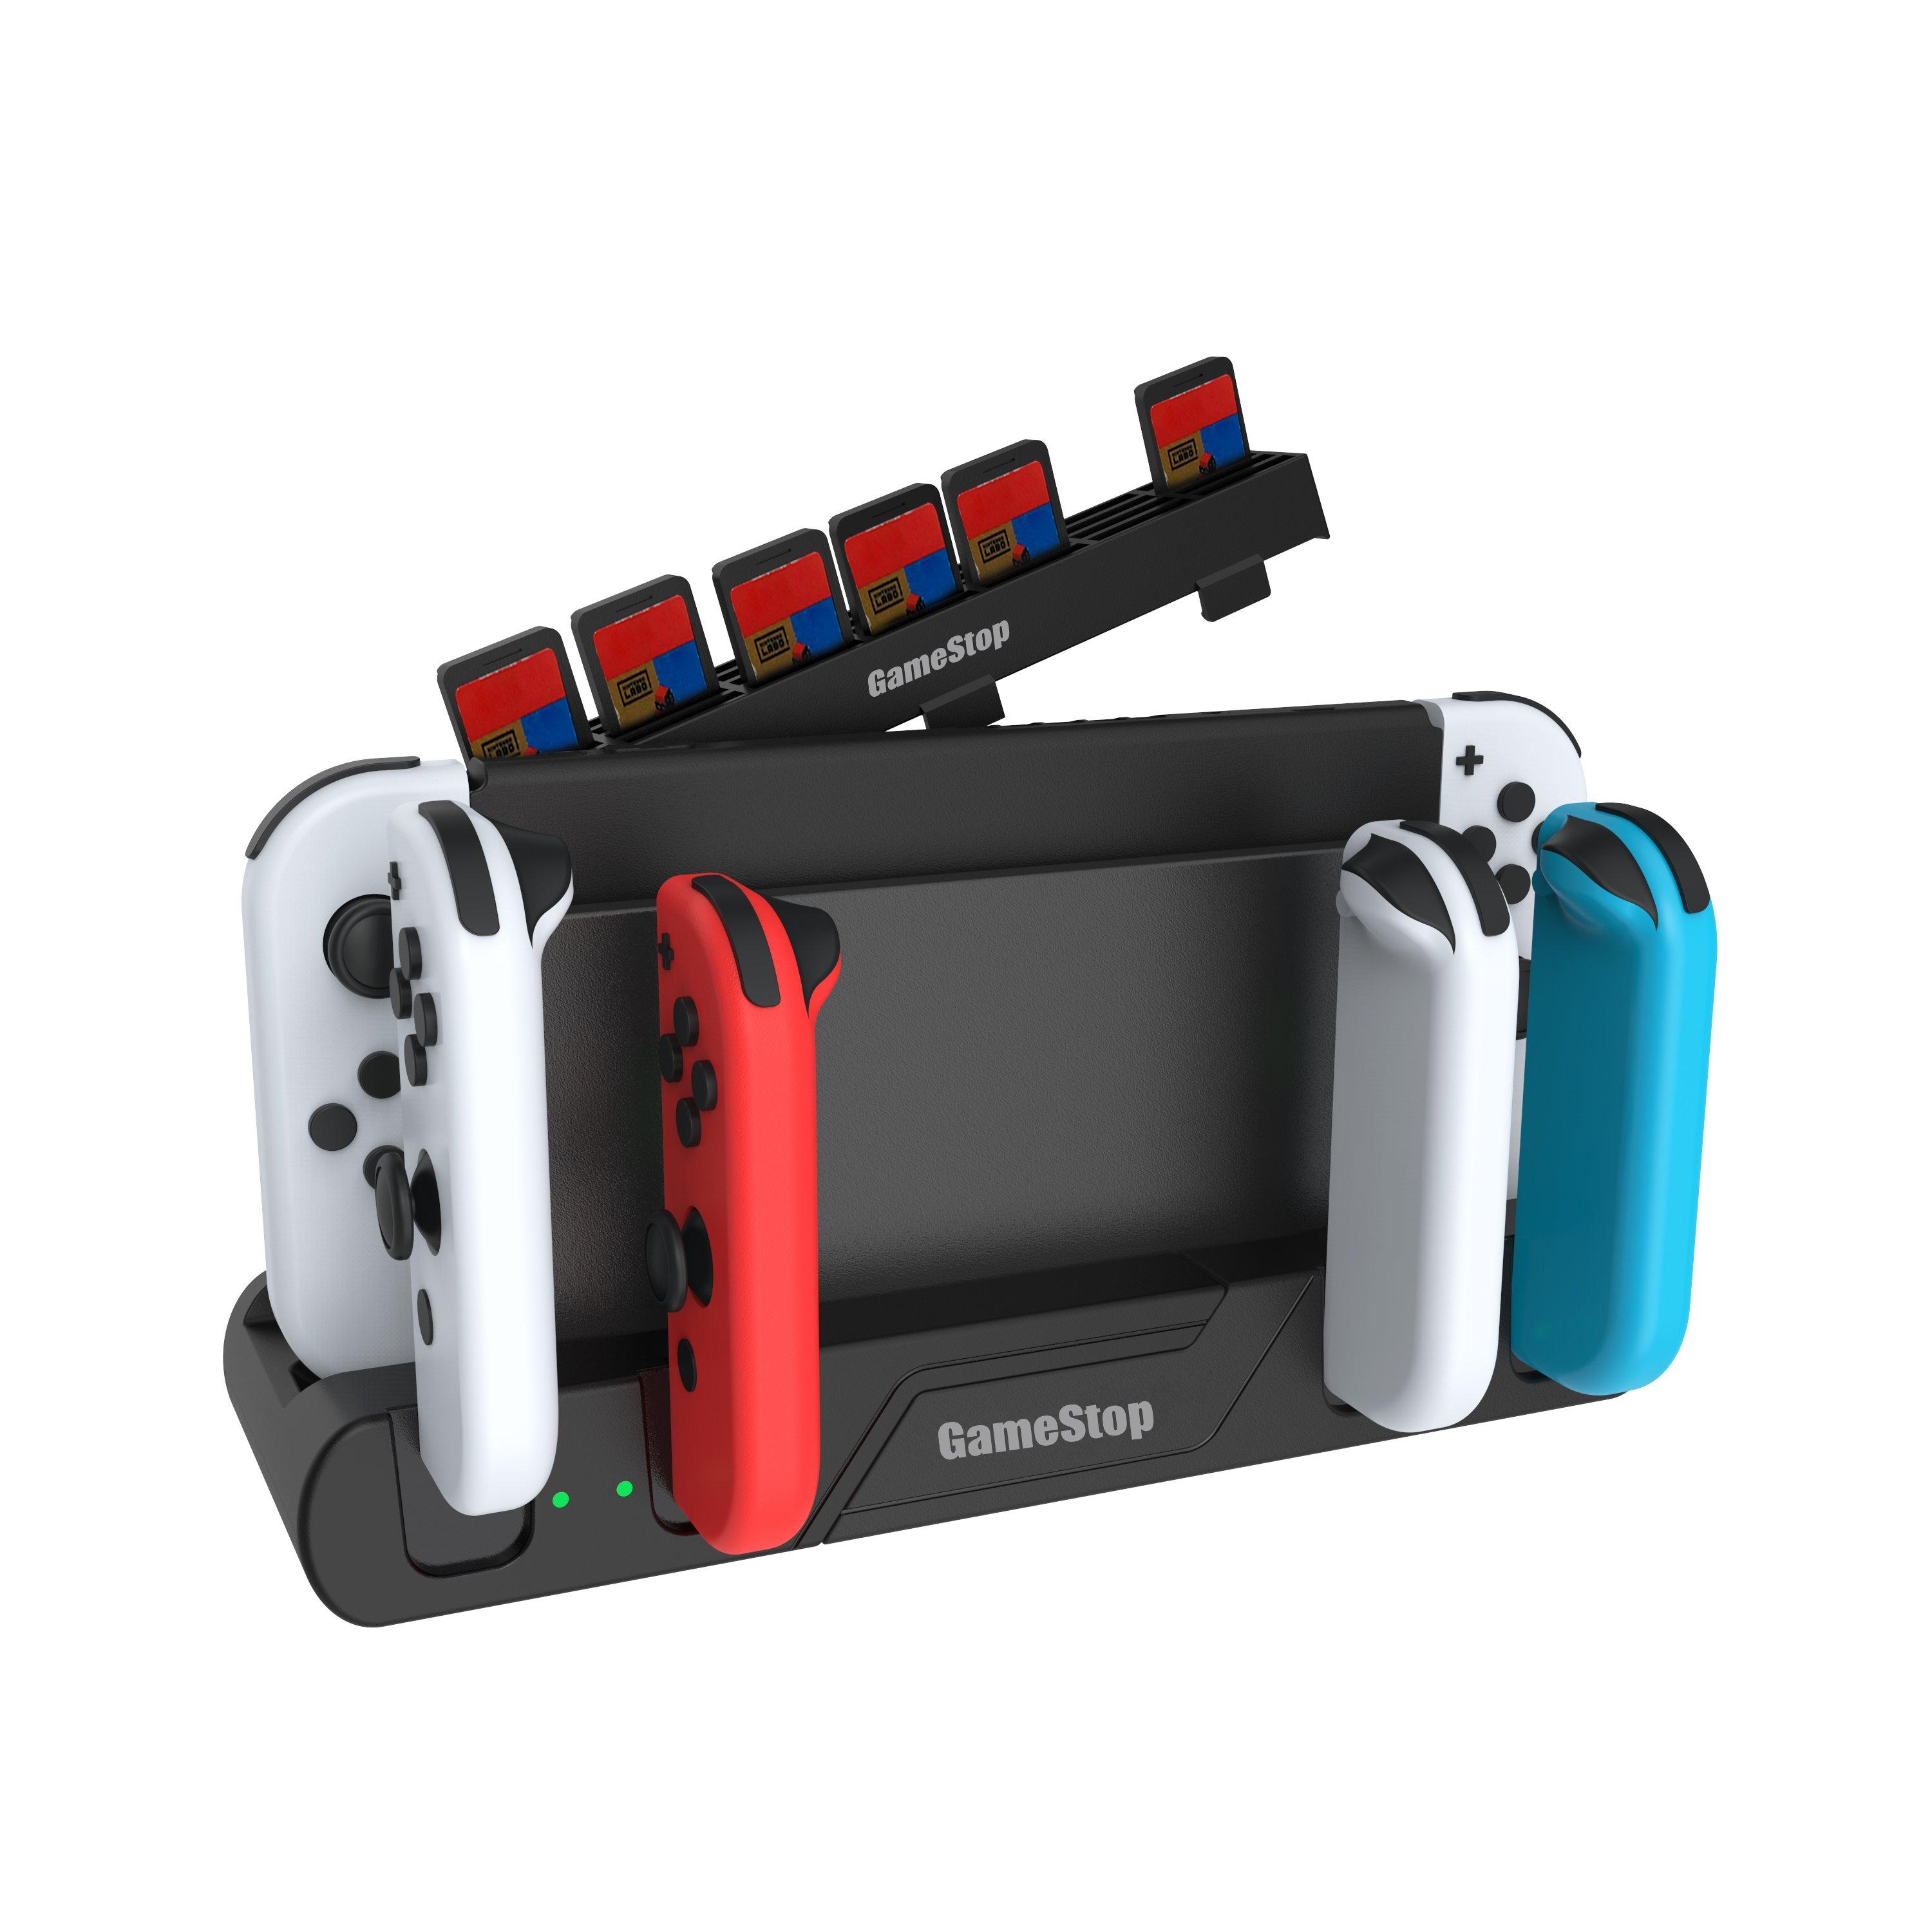 https://media.gamestop.com/i/gamestop/11182540/GameStop-Nintendo-Switch-6-in-1-Charging-Dock-and-Game-Deck?$pdp$